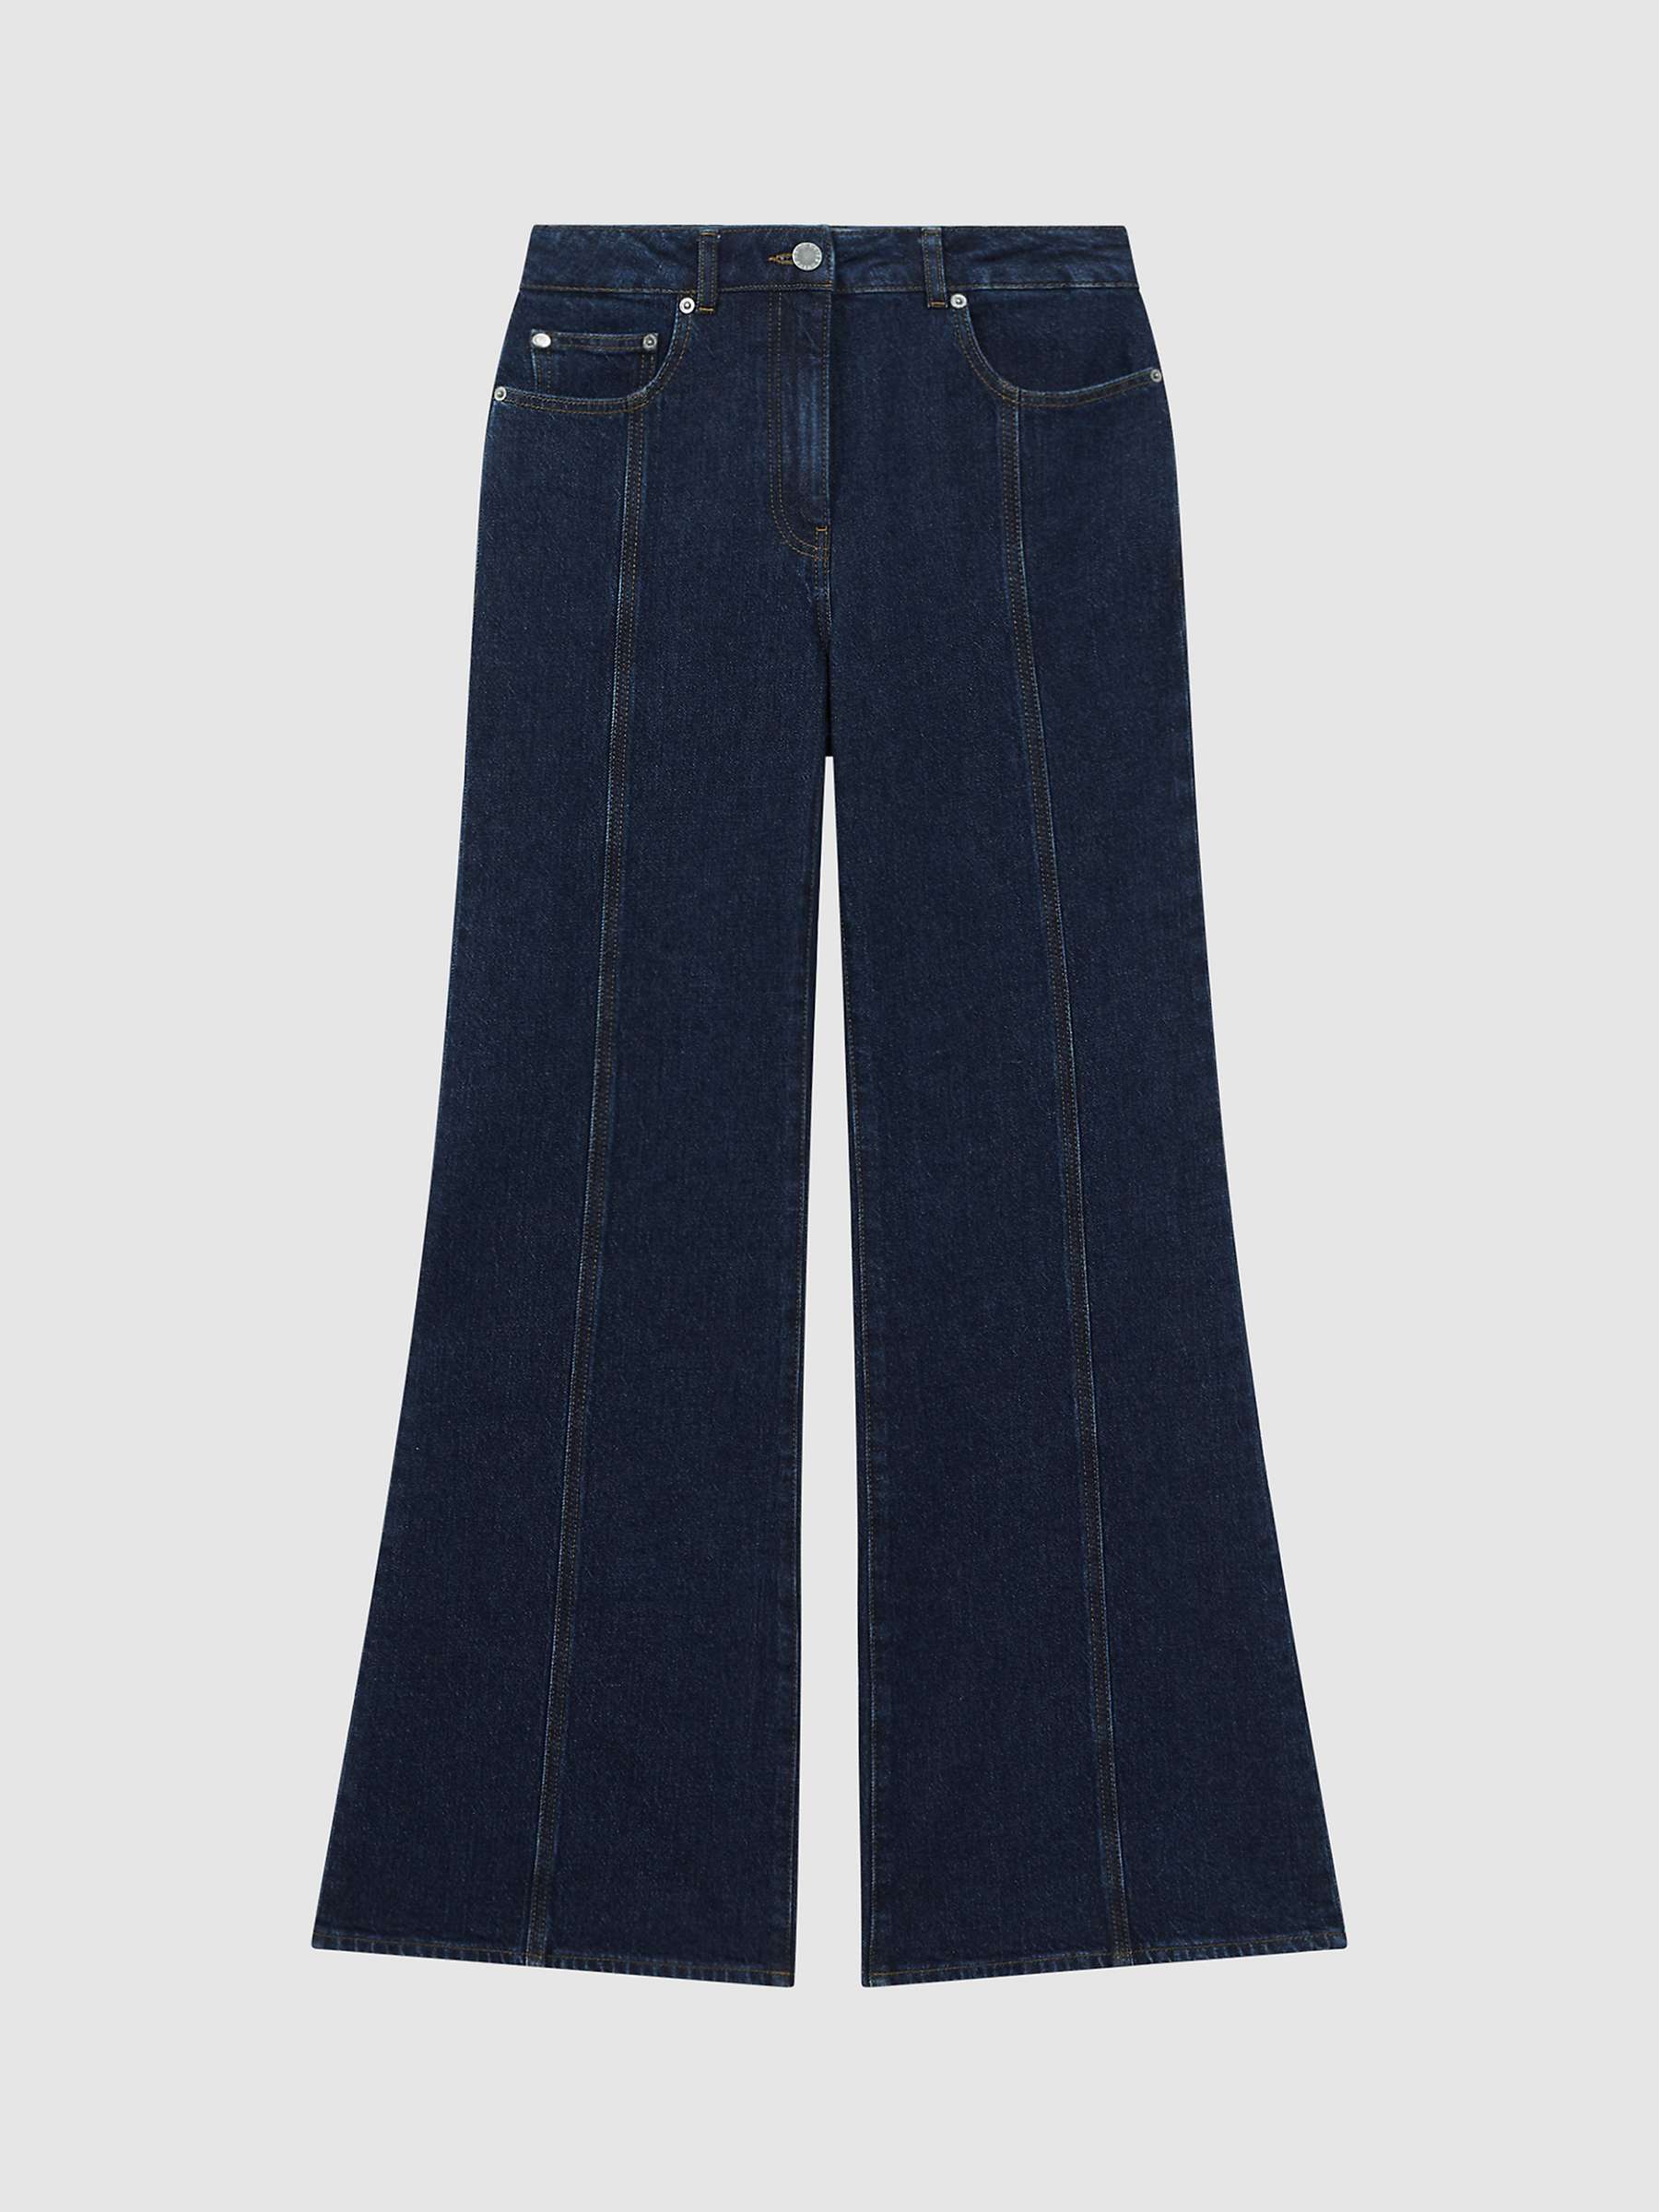 Buy Reiss Petite Juniper Flared Jeans Online at johnlewis.com